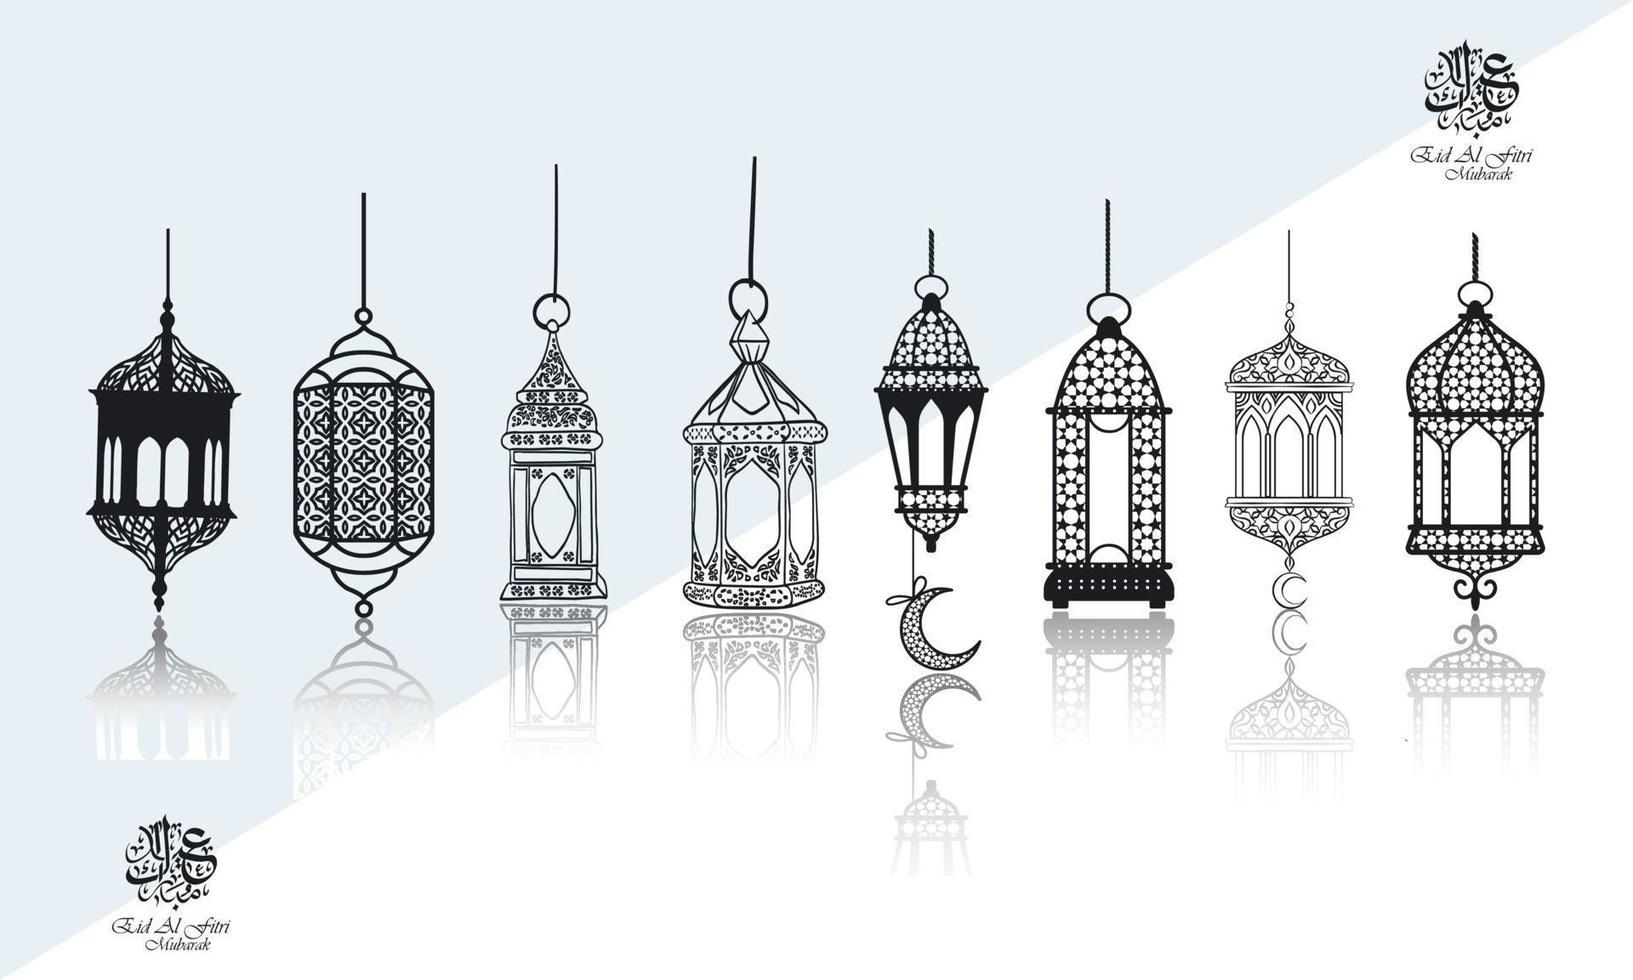 ensembles d'icônes de lampe islamique fotograami vecteur